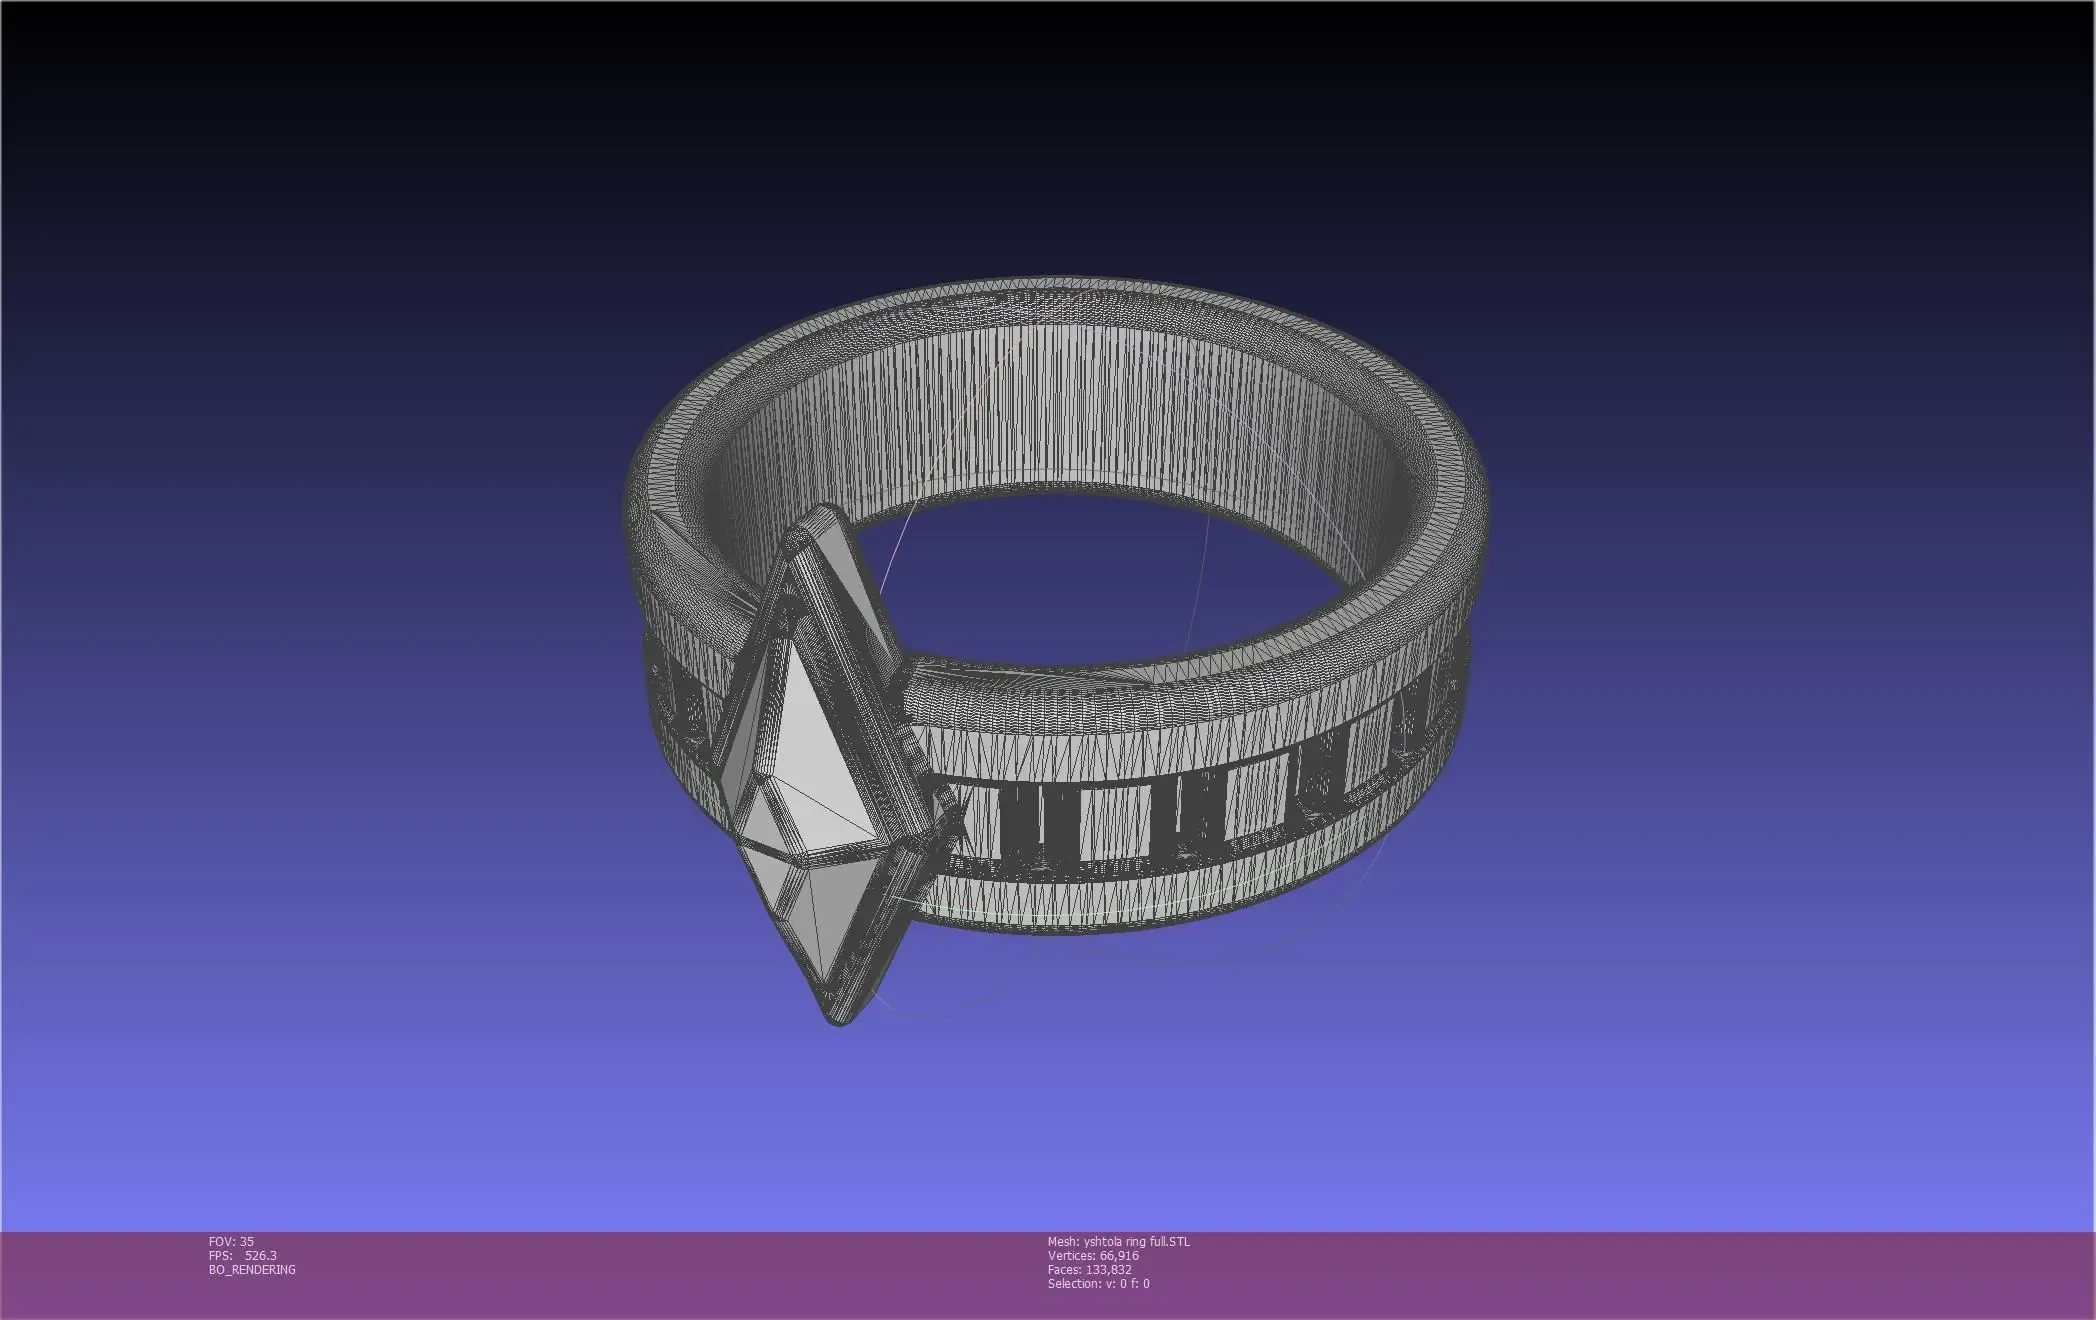 Final Fantasy XIV Yshtola Ring Printable Model